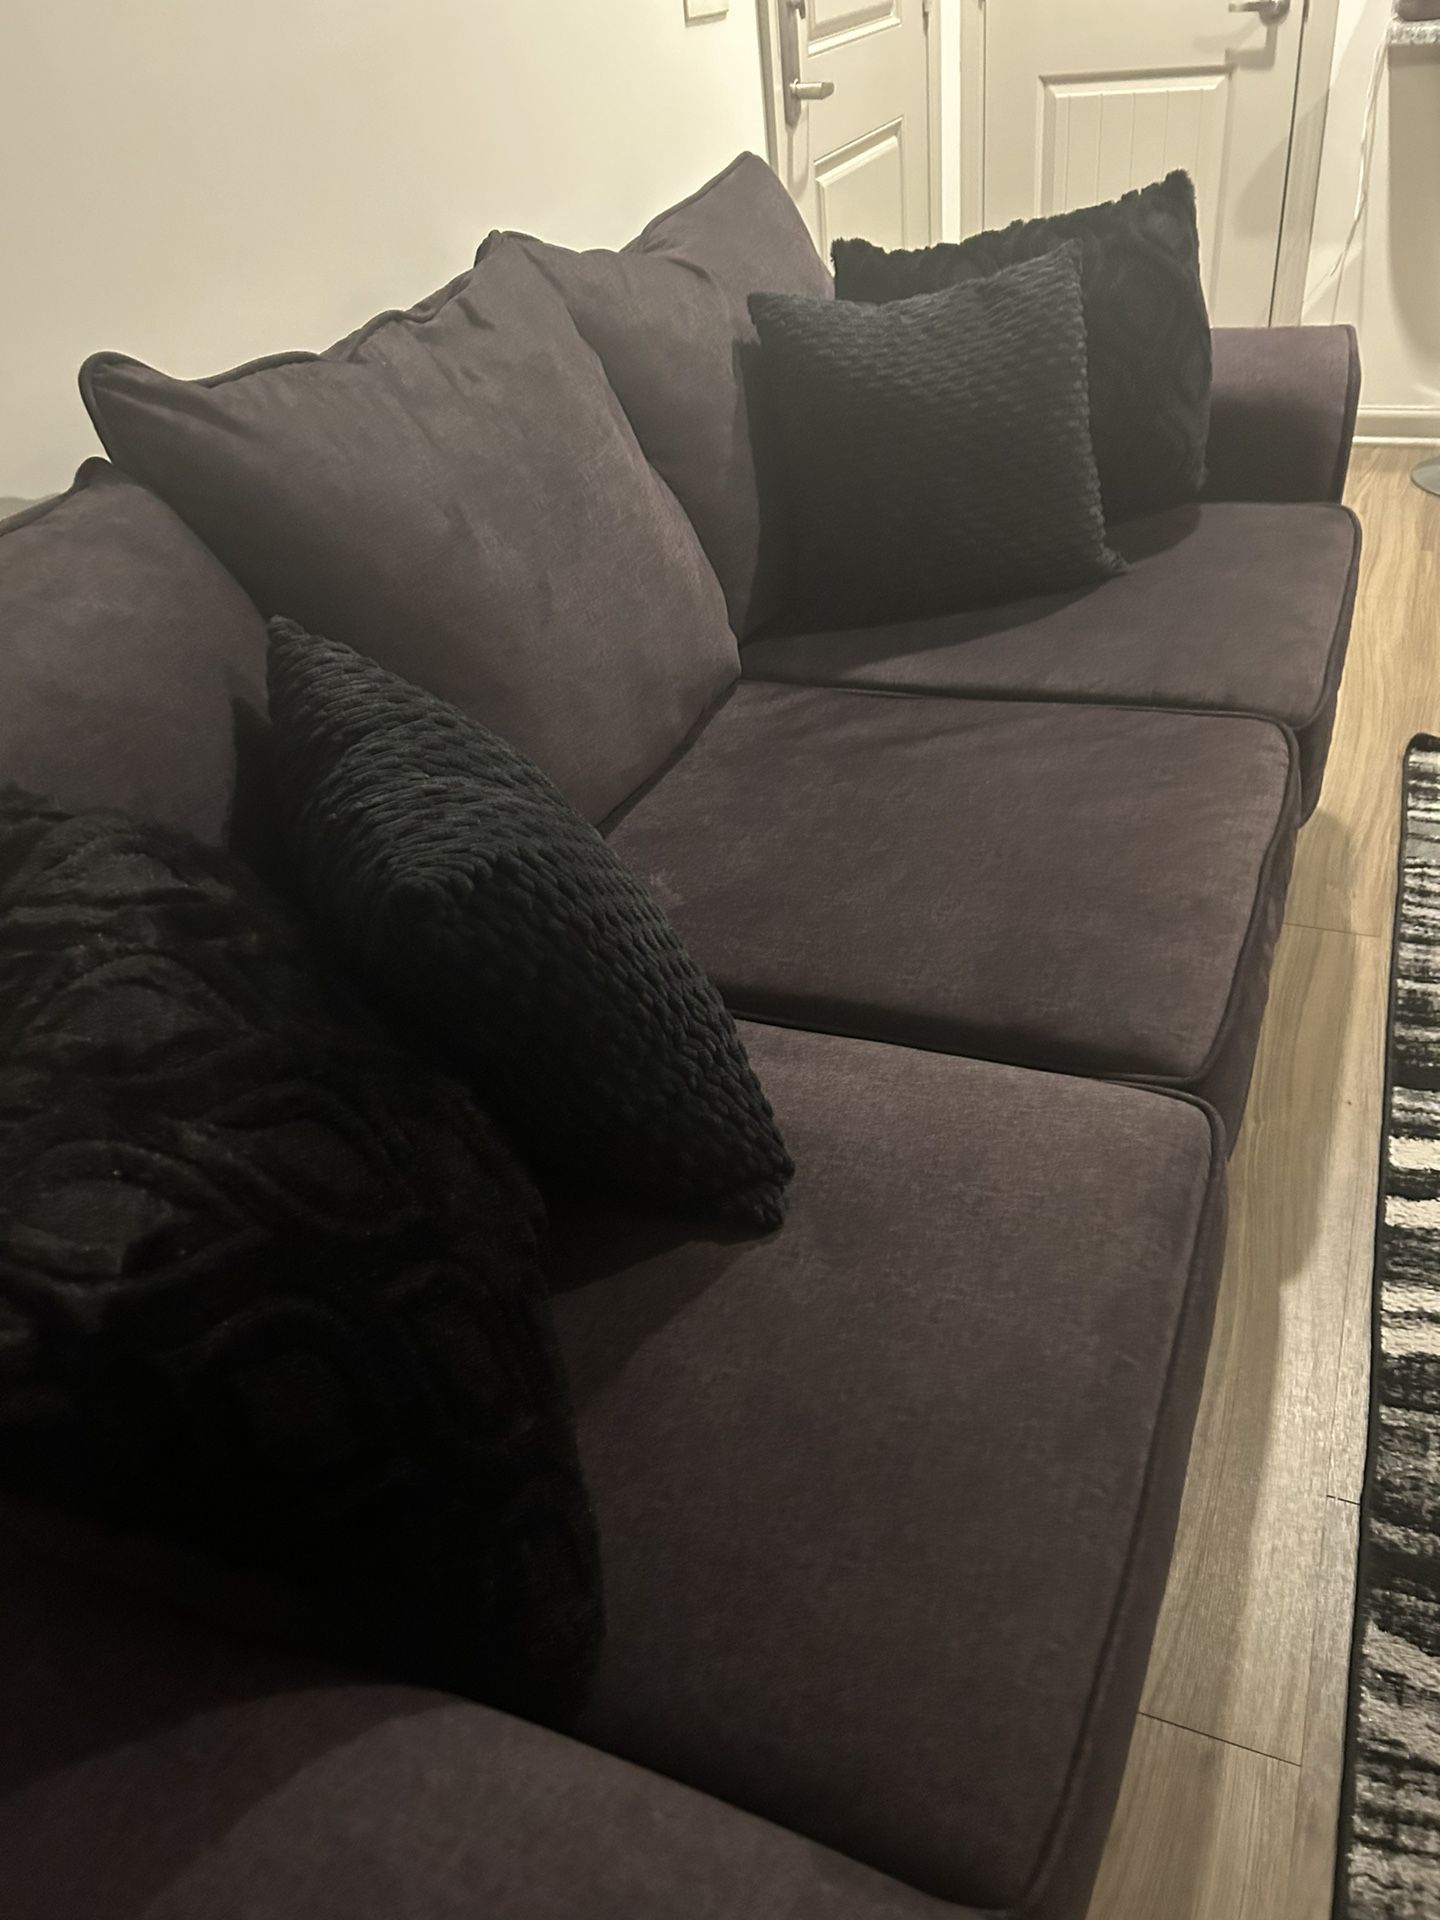 Charcoal Grey Sofa + 4 Pillows $650 OBO